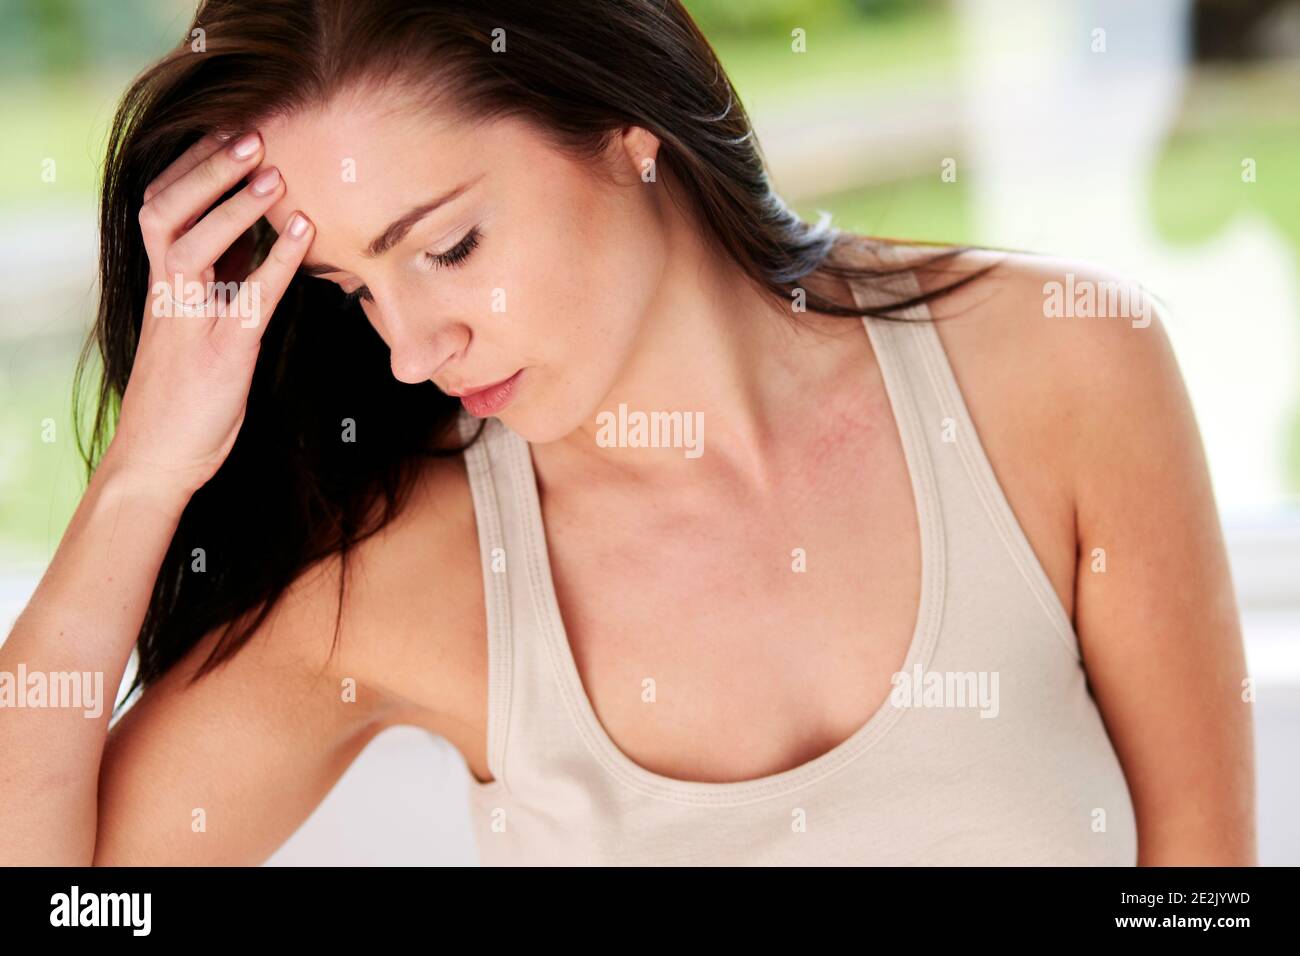 Woman with headache Stock Photo